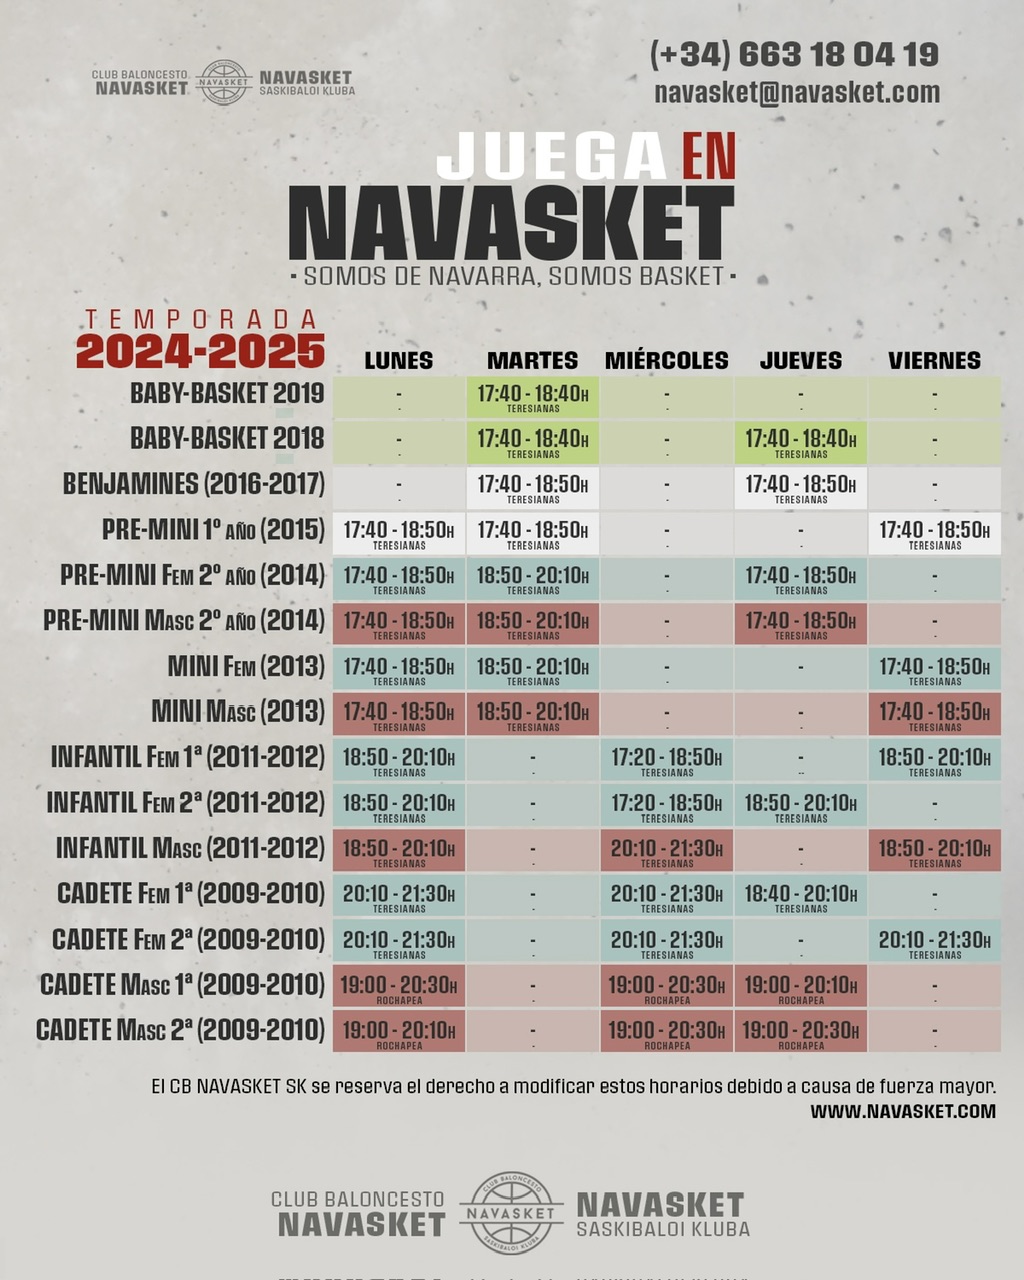 NVT | Temporada 2024-2025 denboraldia (horarios)